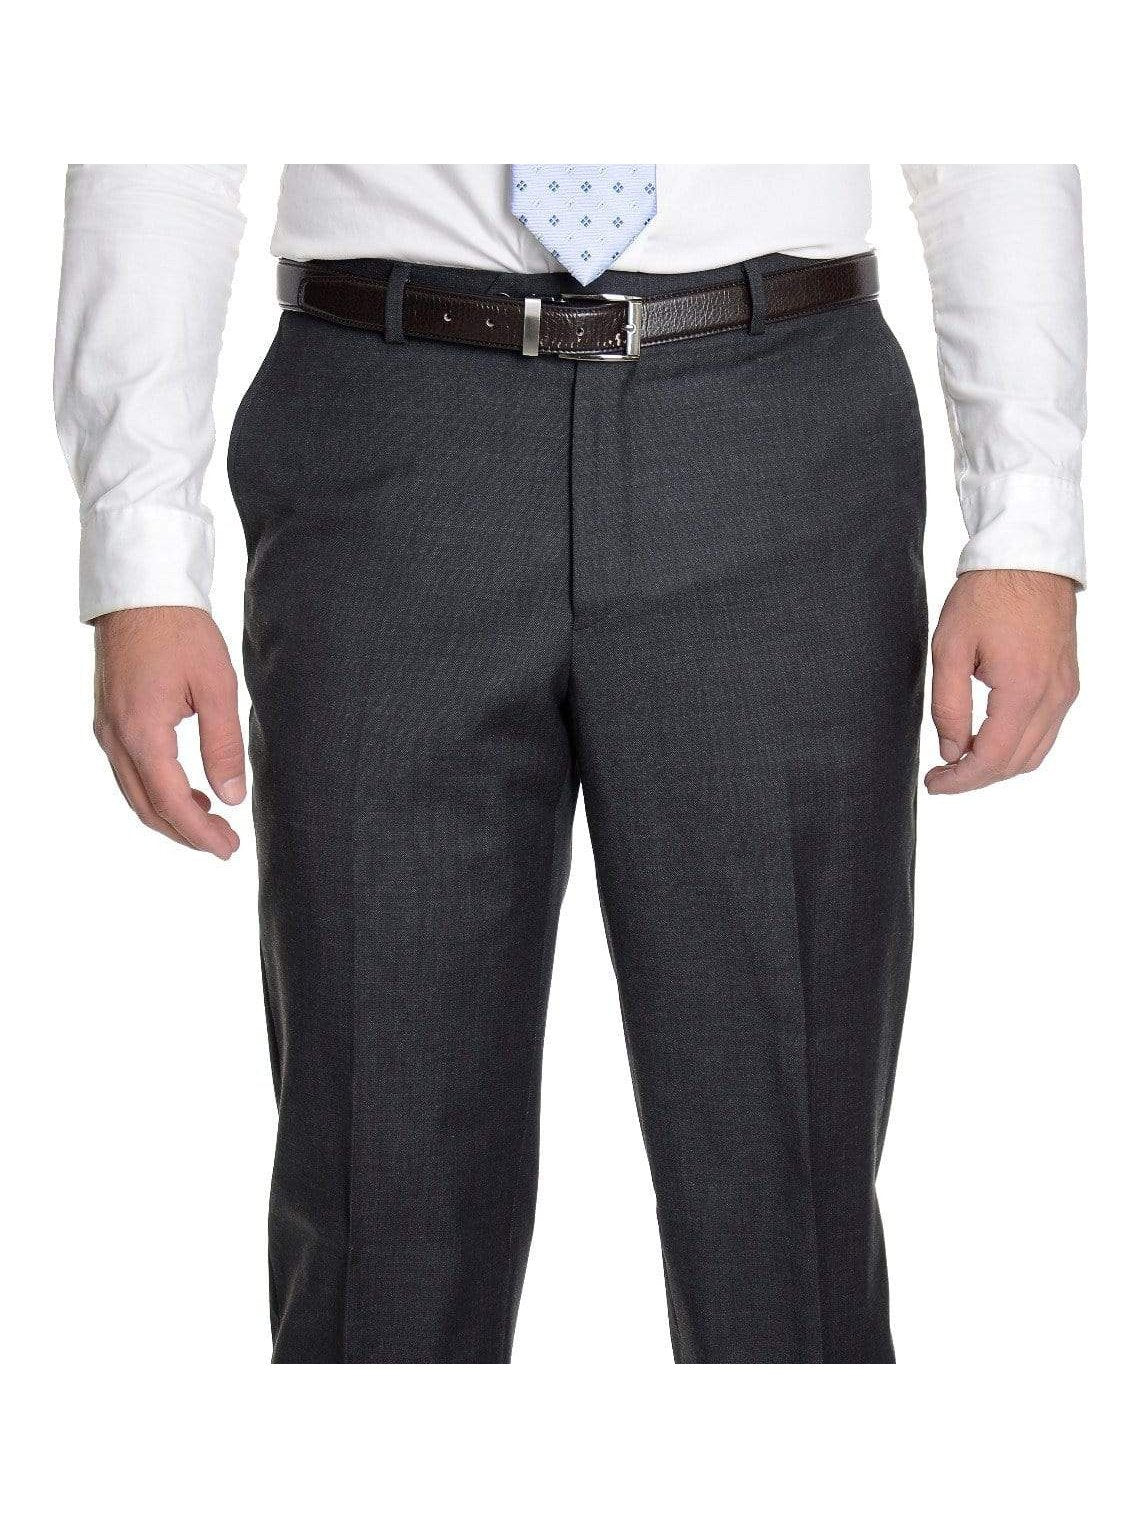 Label E PANTS Mens Modern Fit Gray Pindot Flat Front Wool Dress Pants